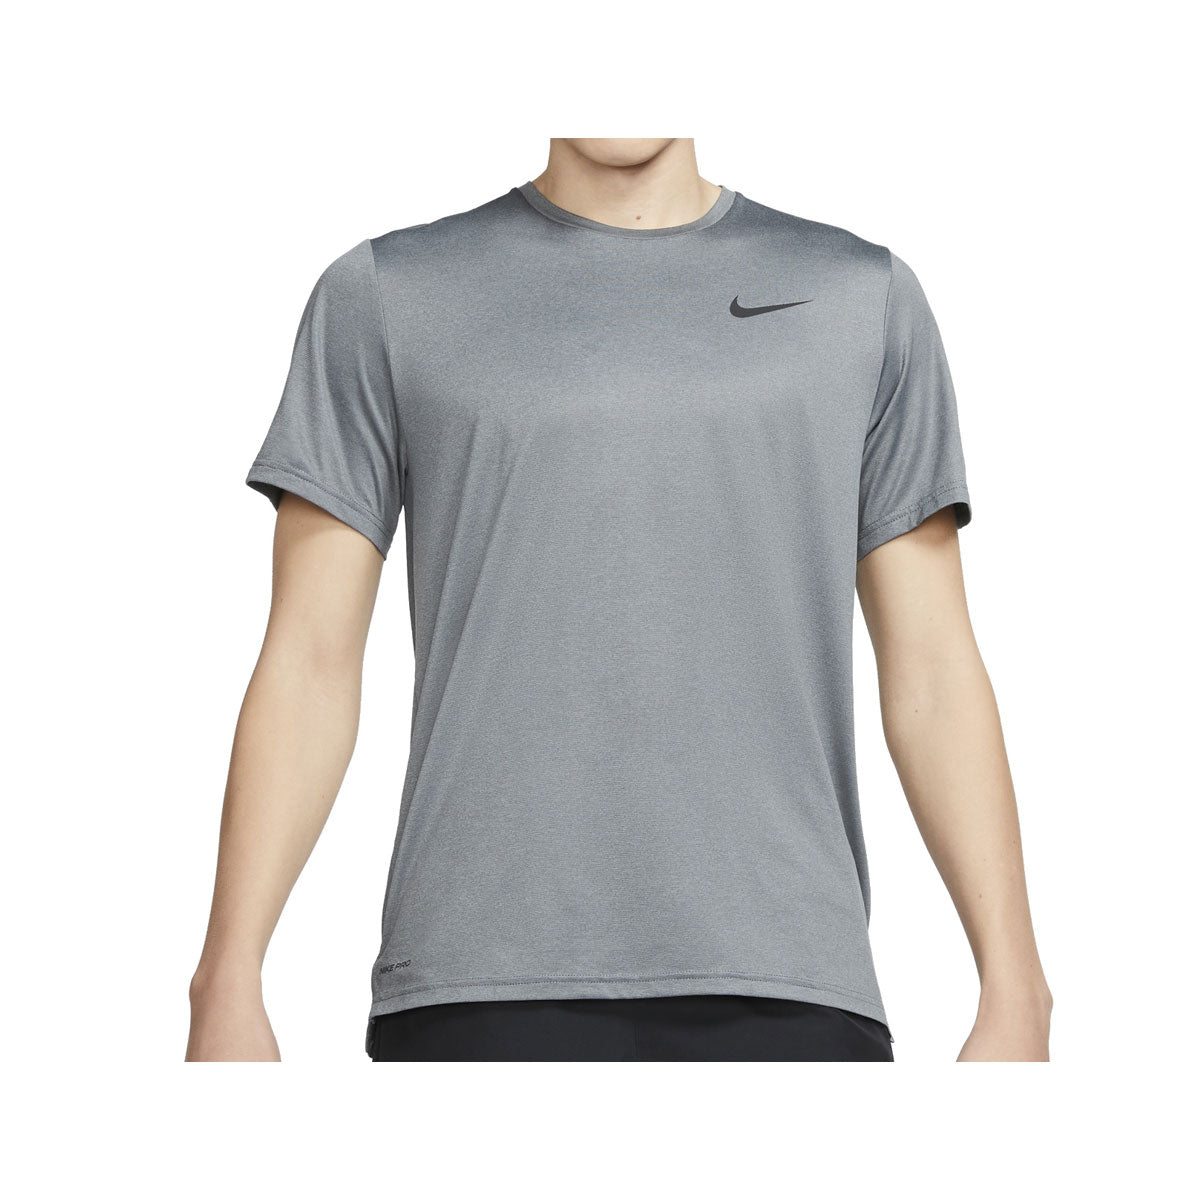 Nike Men's Pro Dri-FIT Short-Sleeve Top